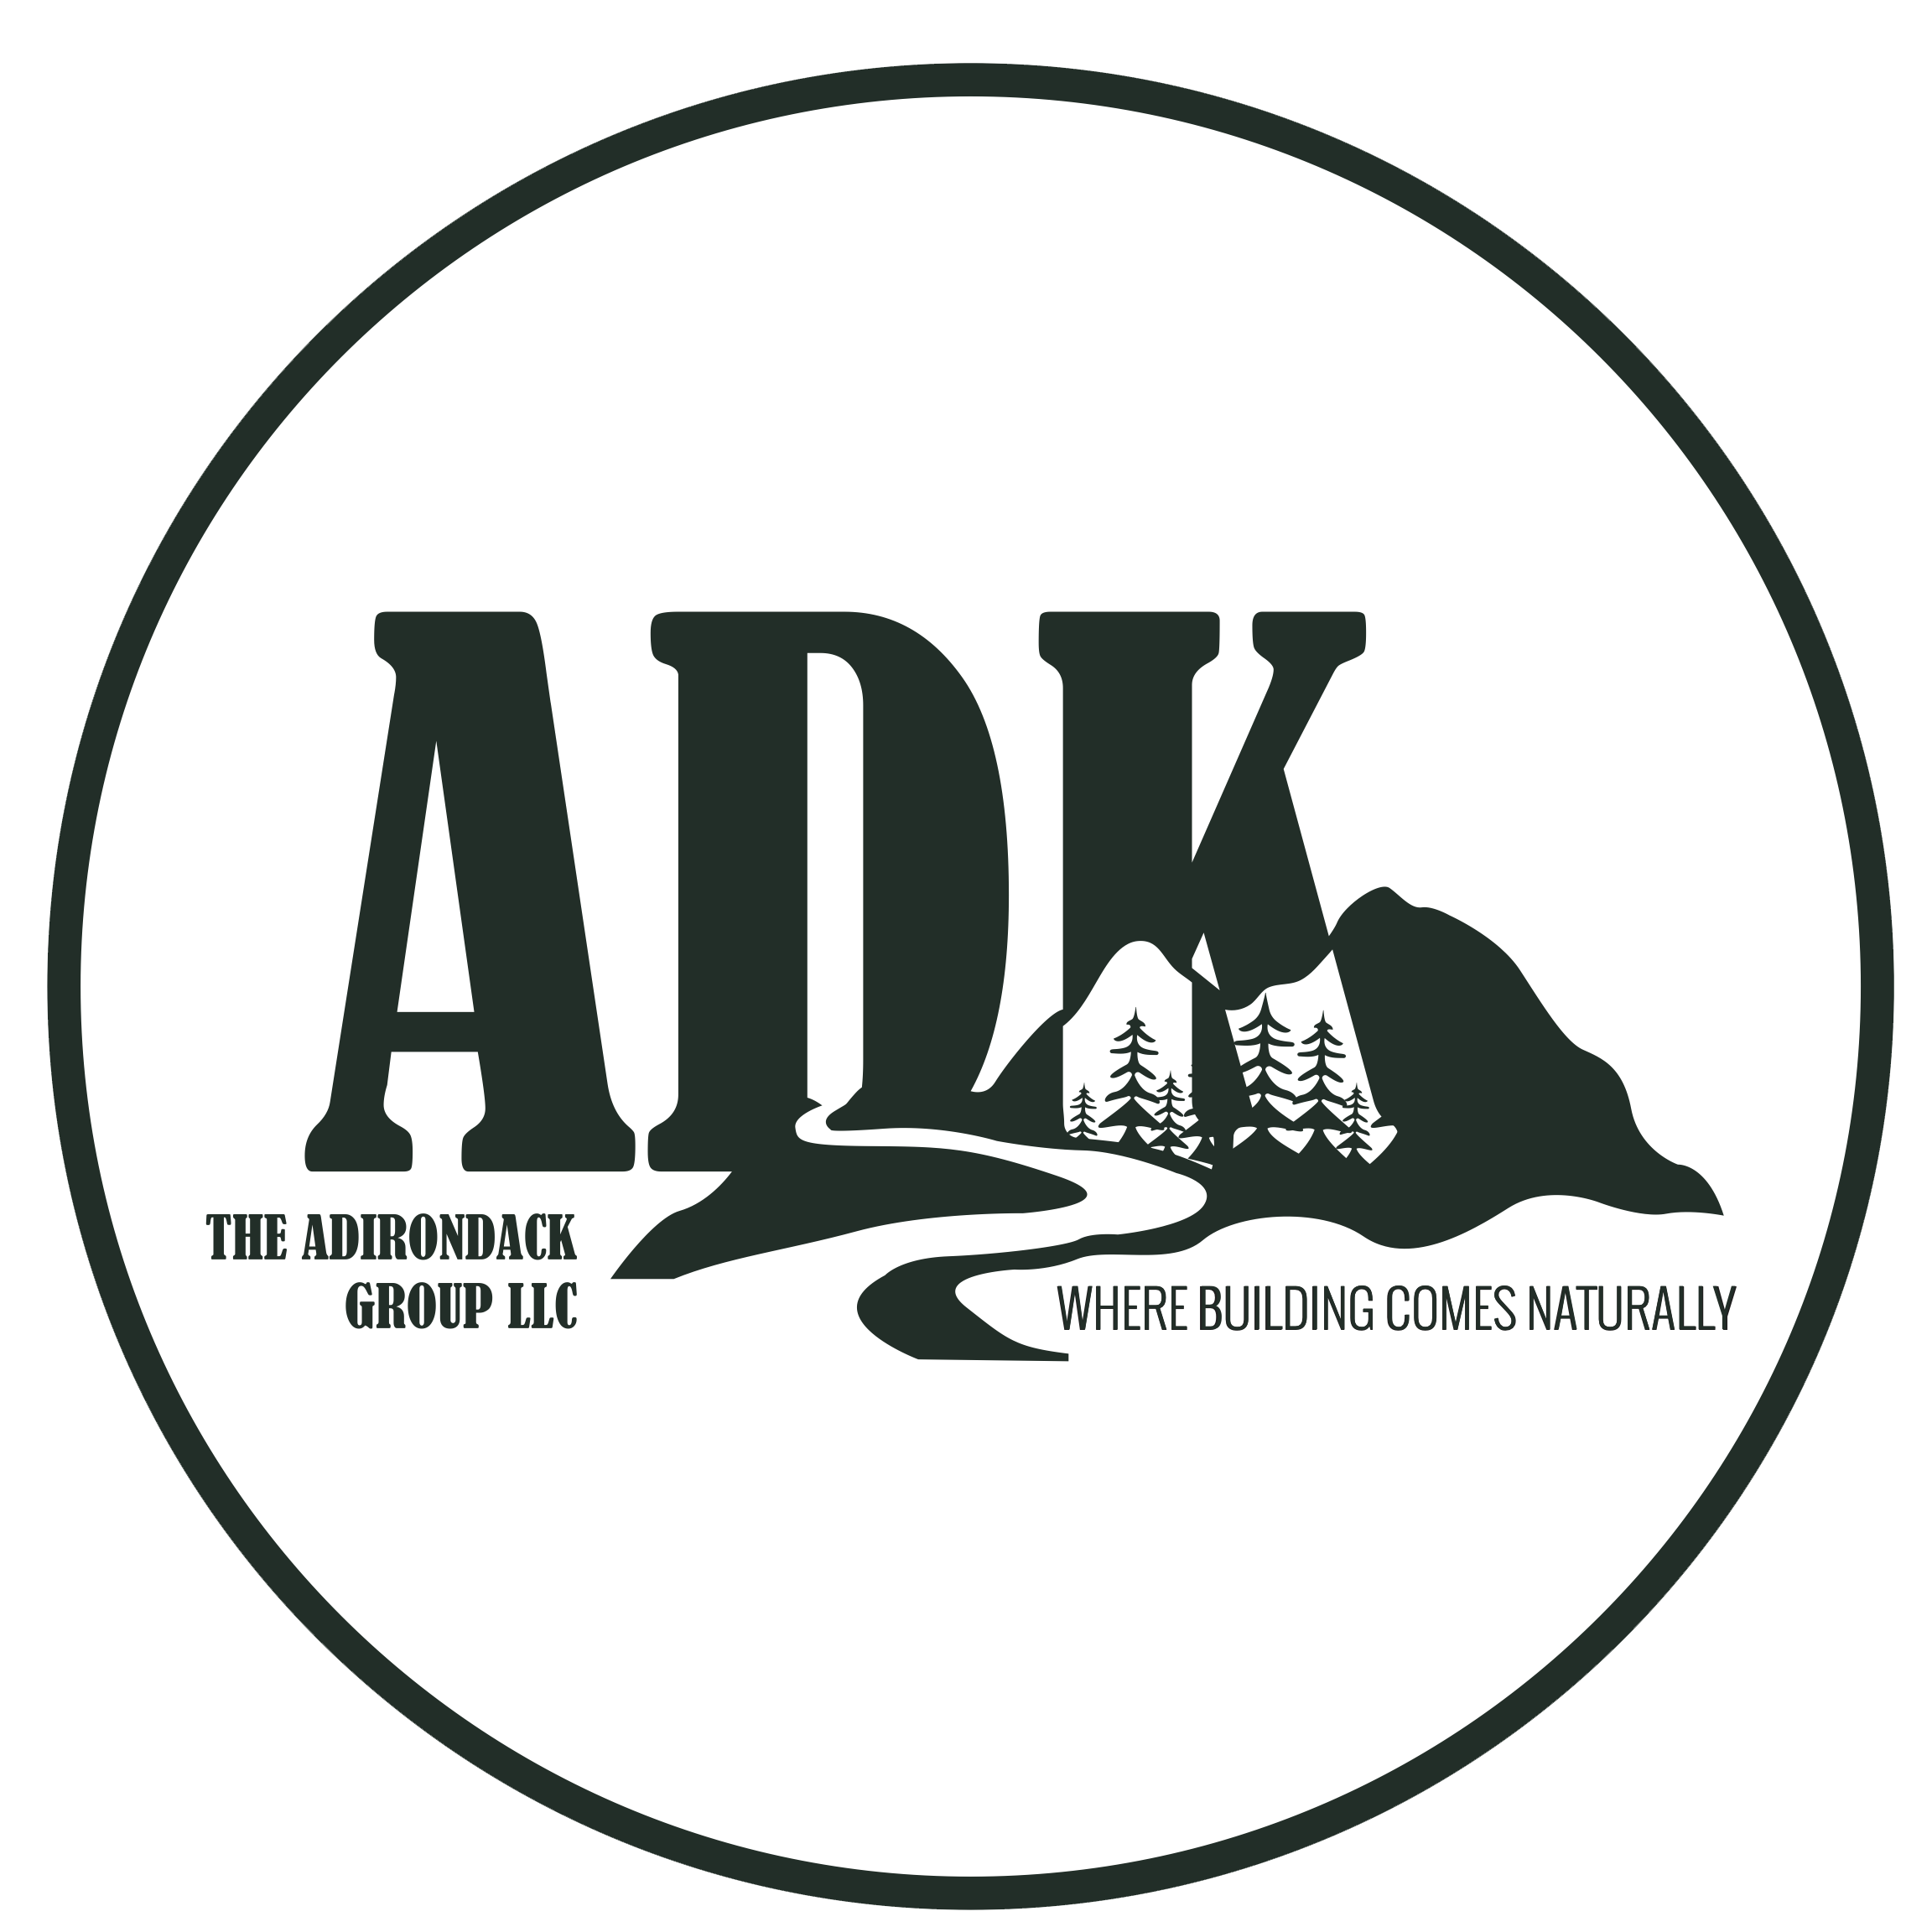 The Adirondack Group LLC